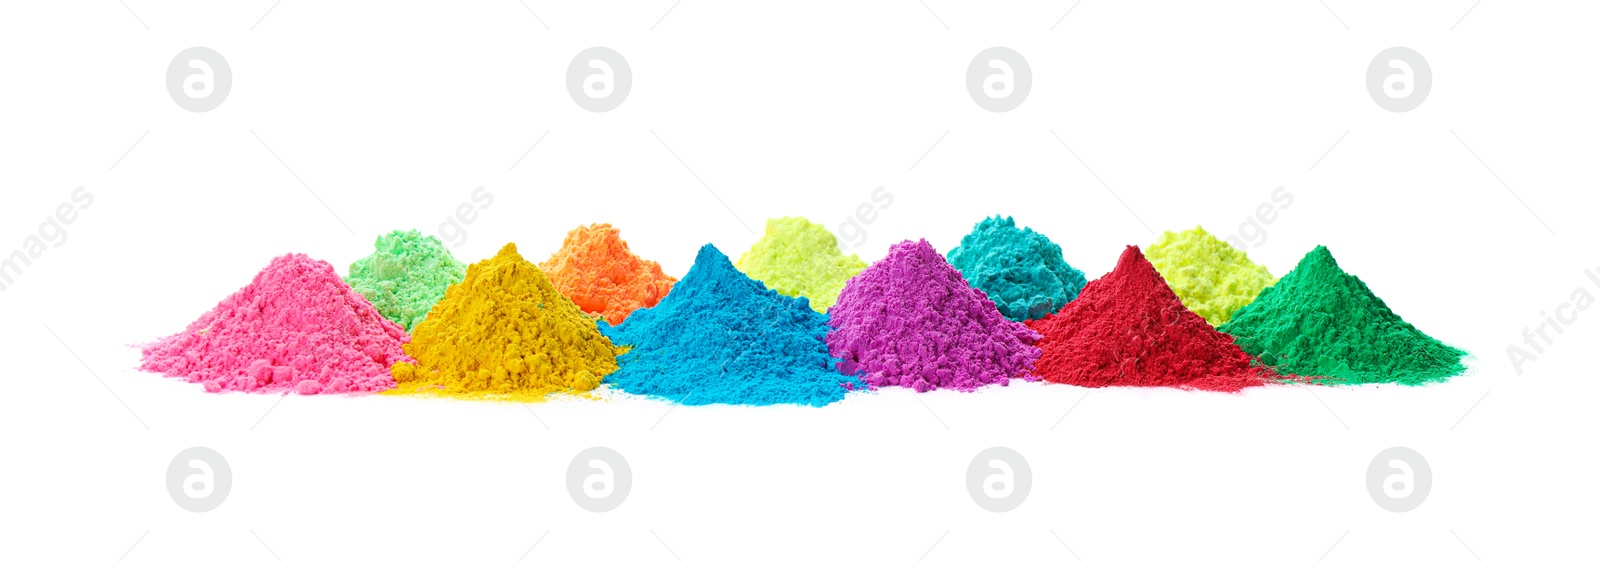 Photo of Colorful powder dyes on white background. Holi festival